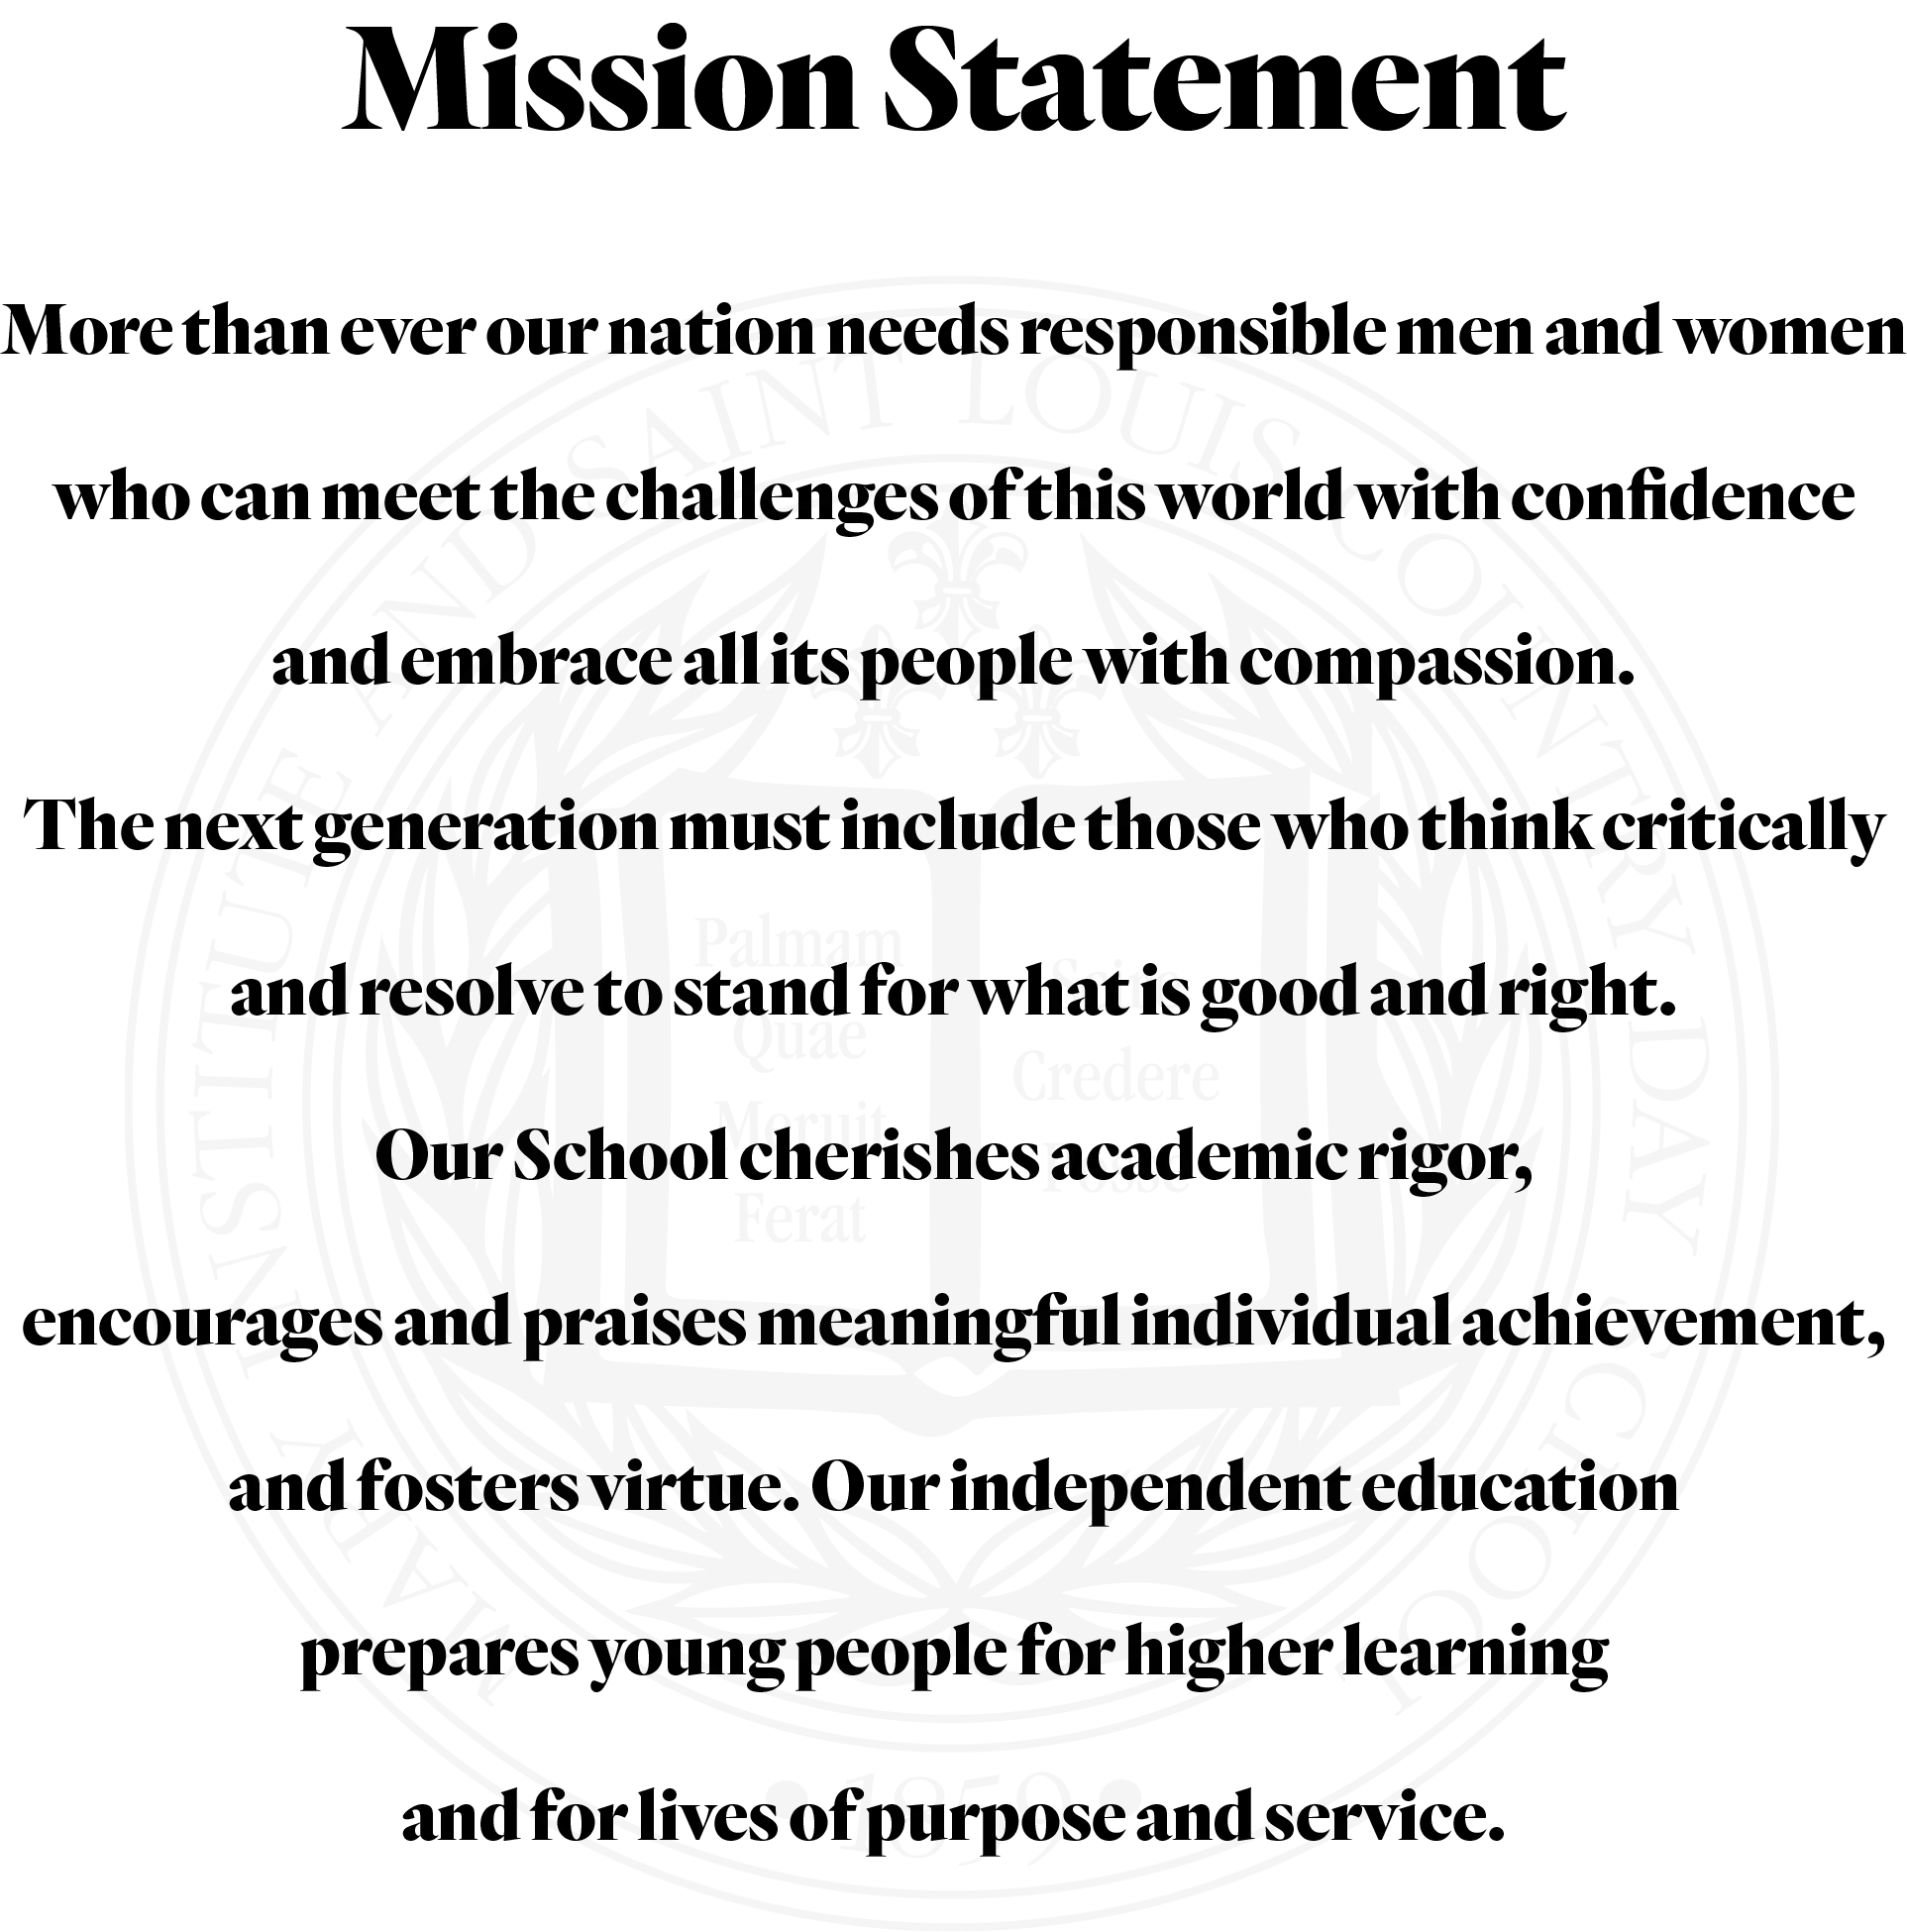 mission statement is